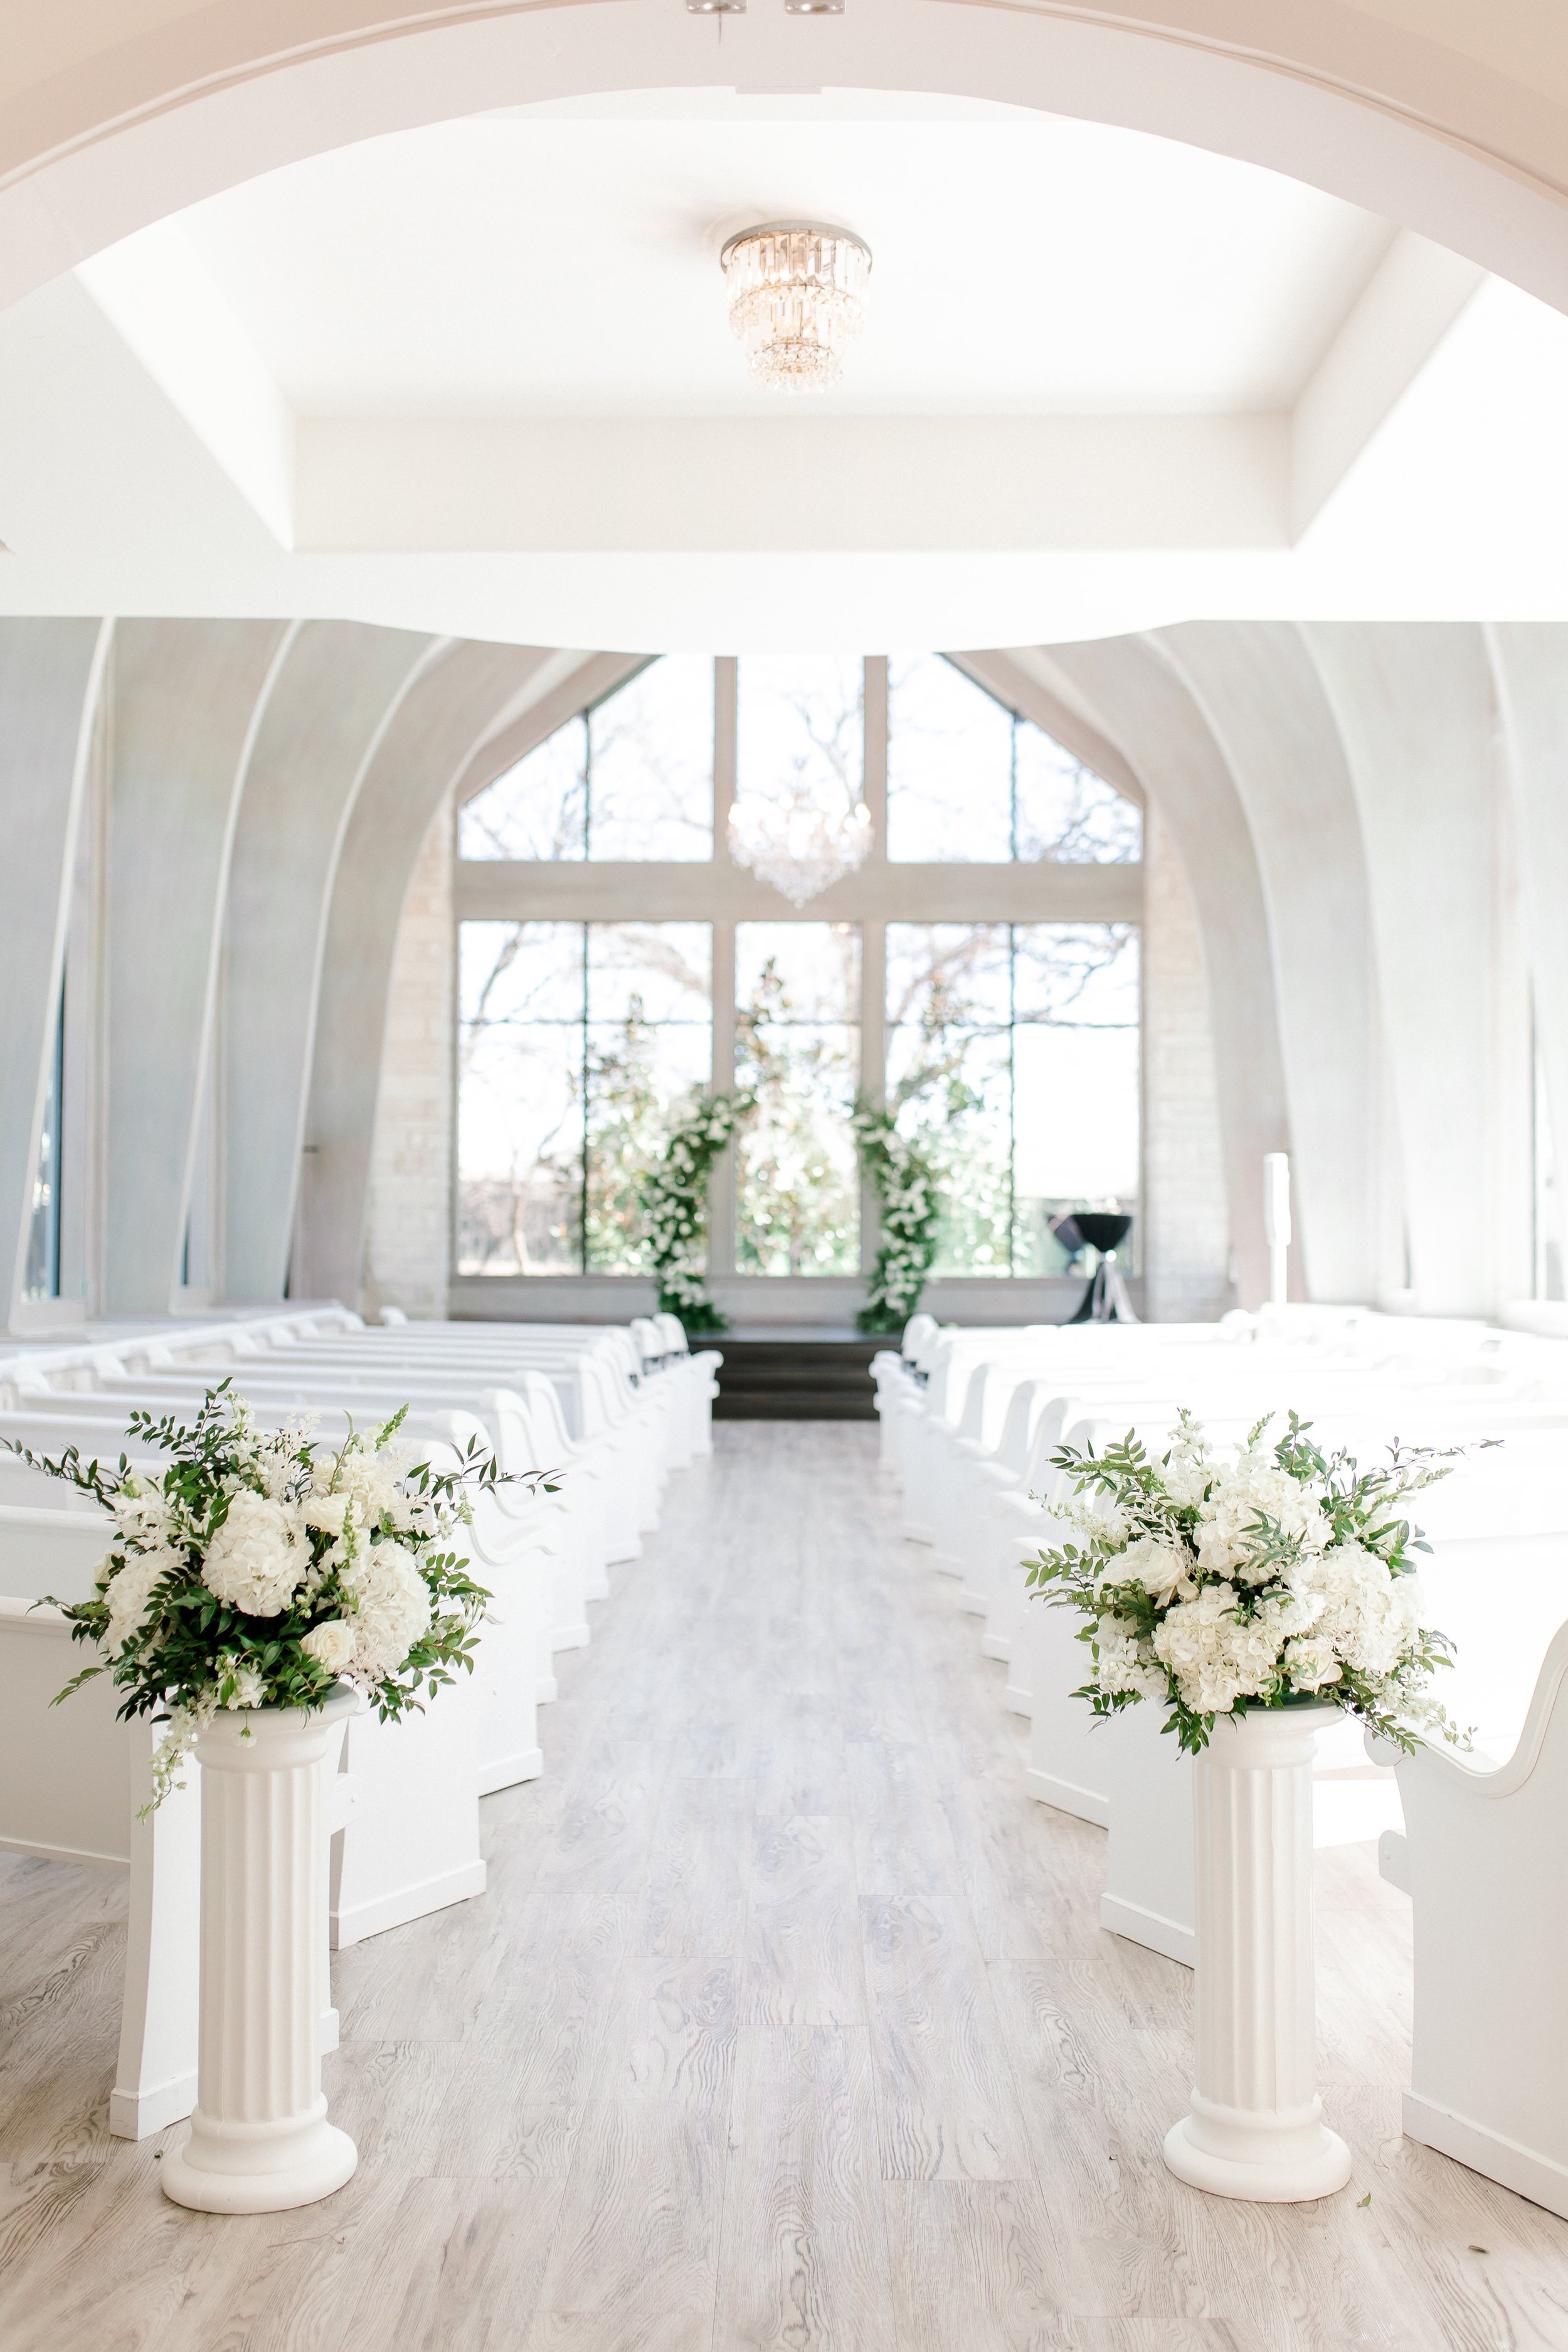 The brighton Abbey Wedding Chapel